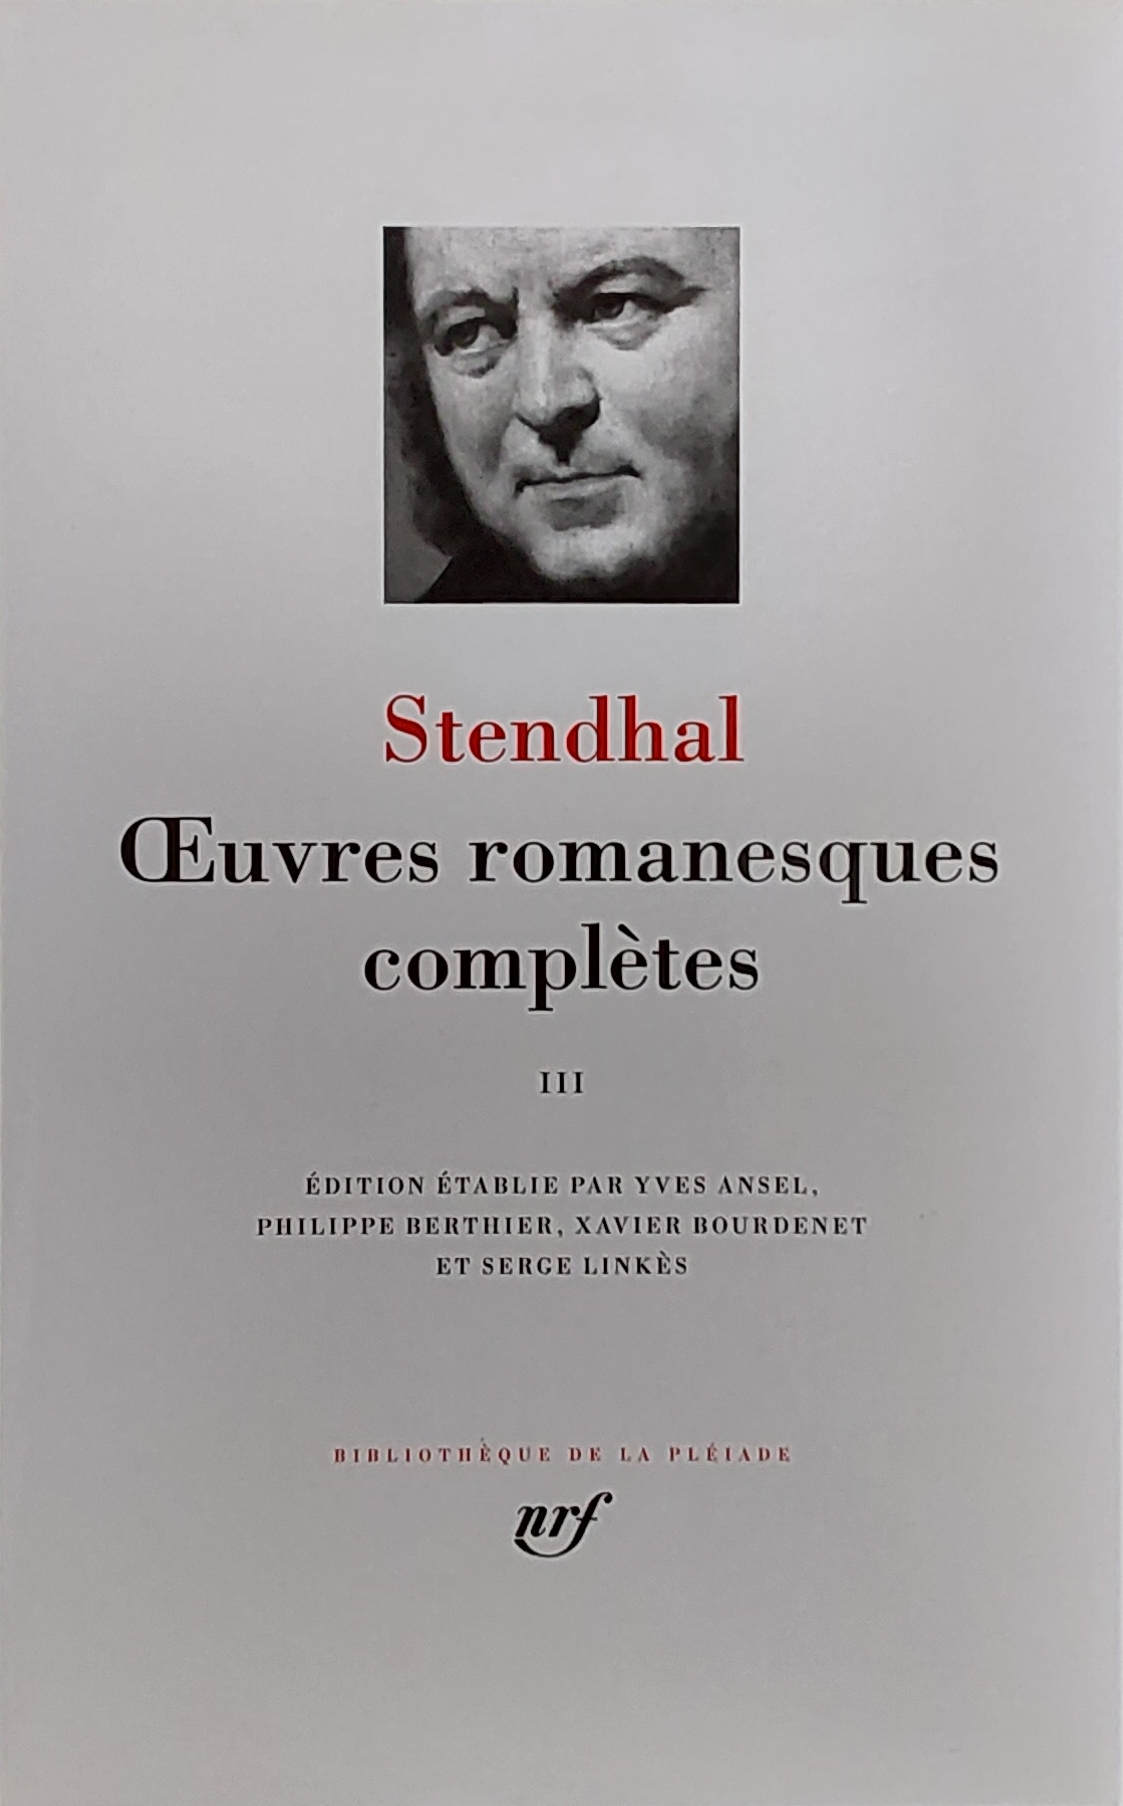 Stendhal dans la collection de la bibliothèque de la Pléiade